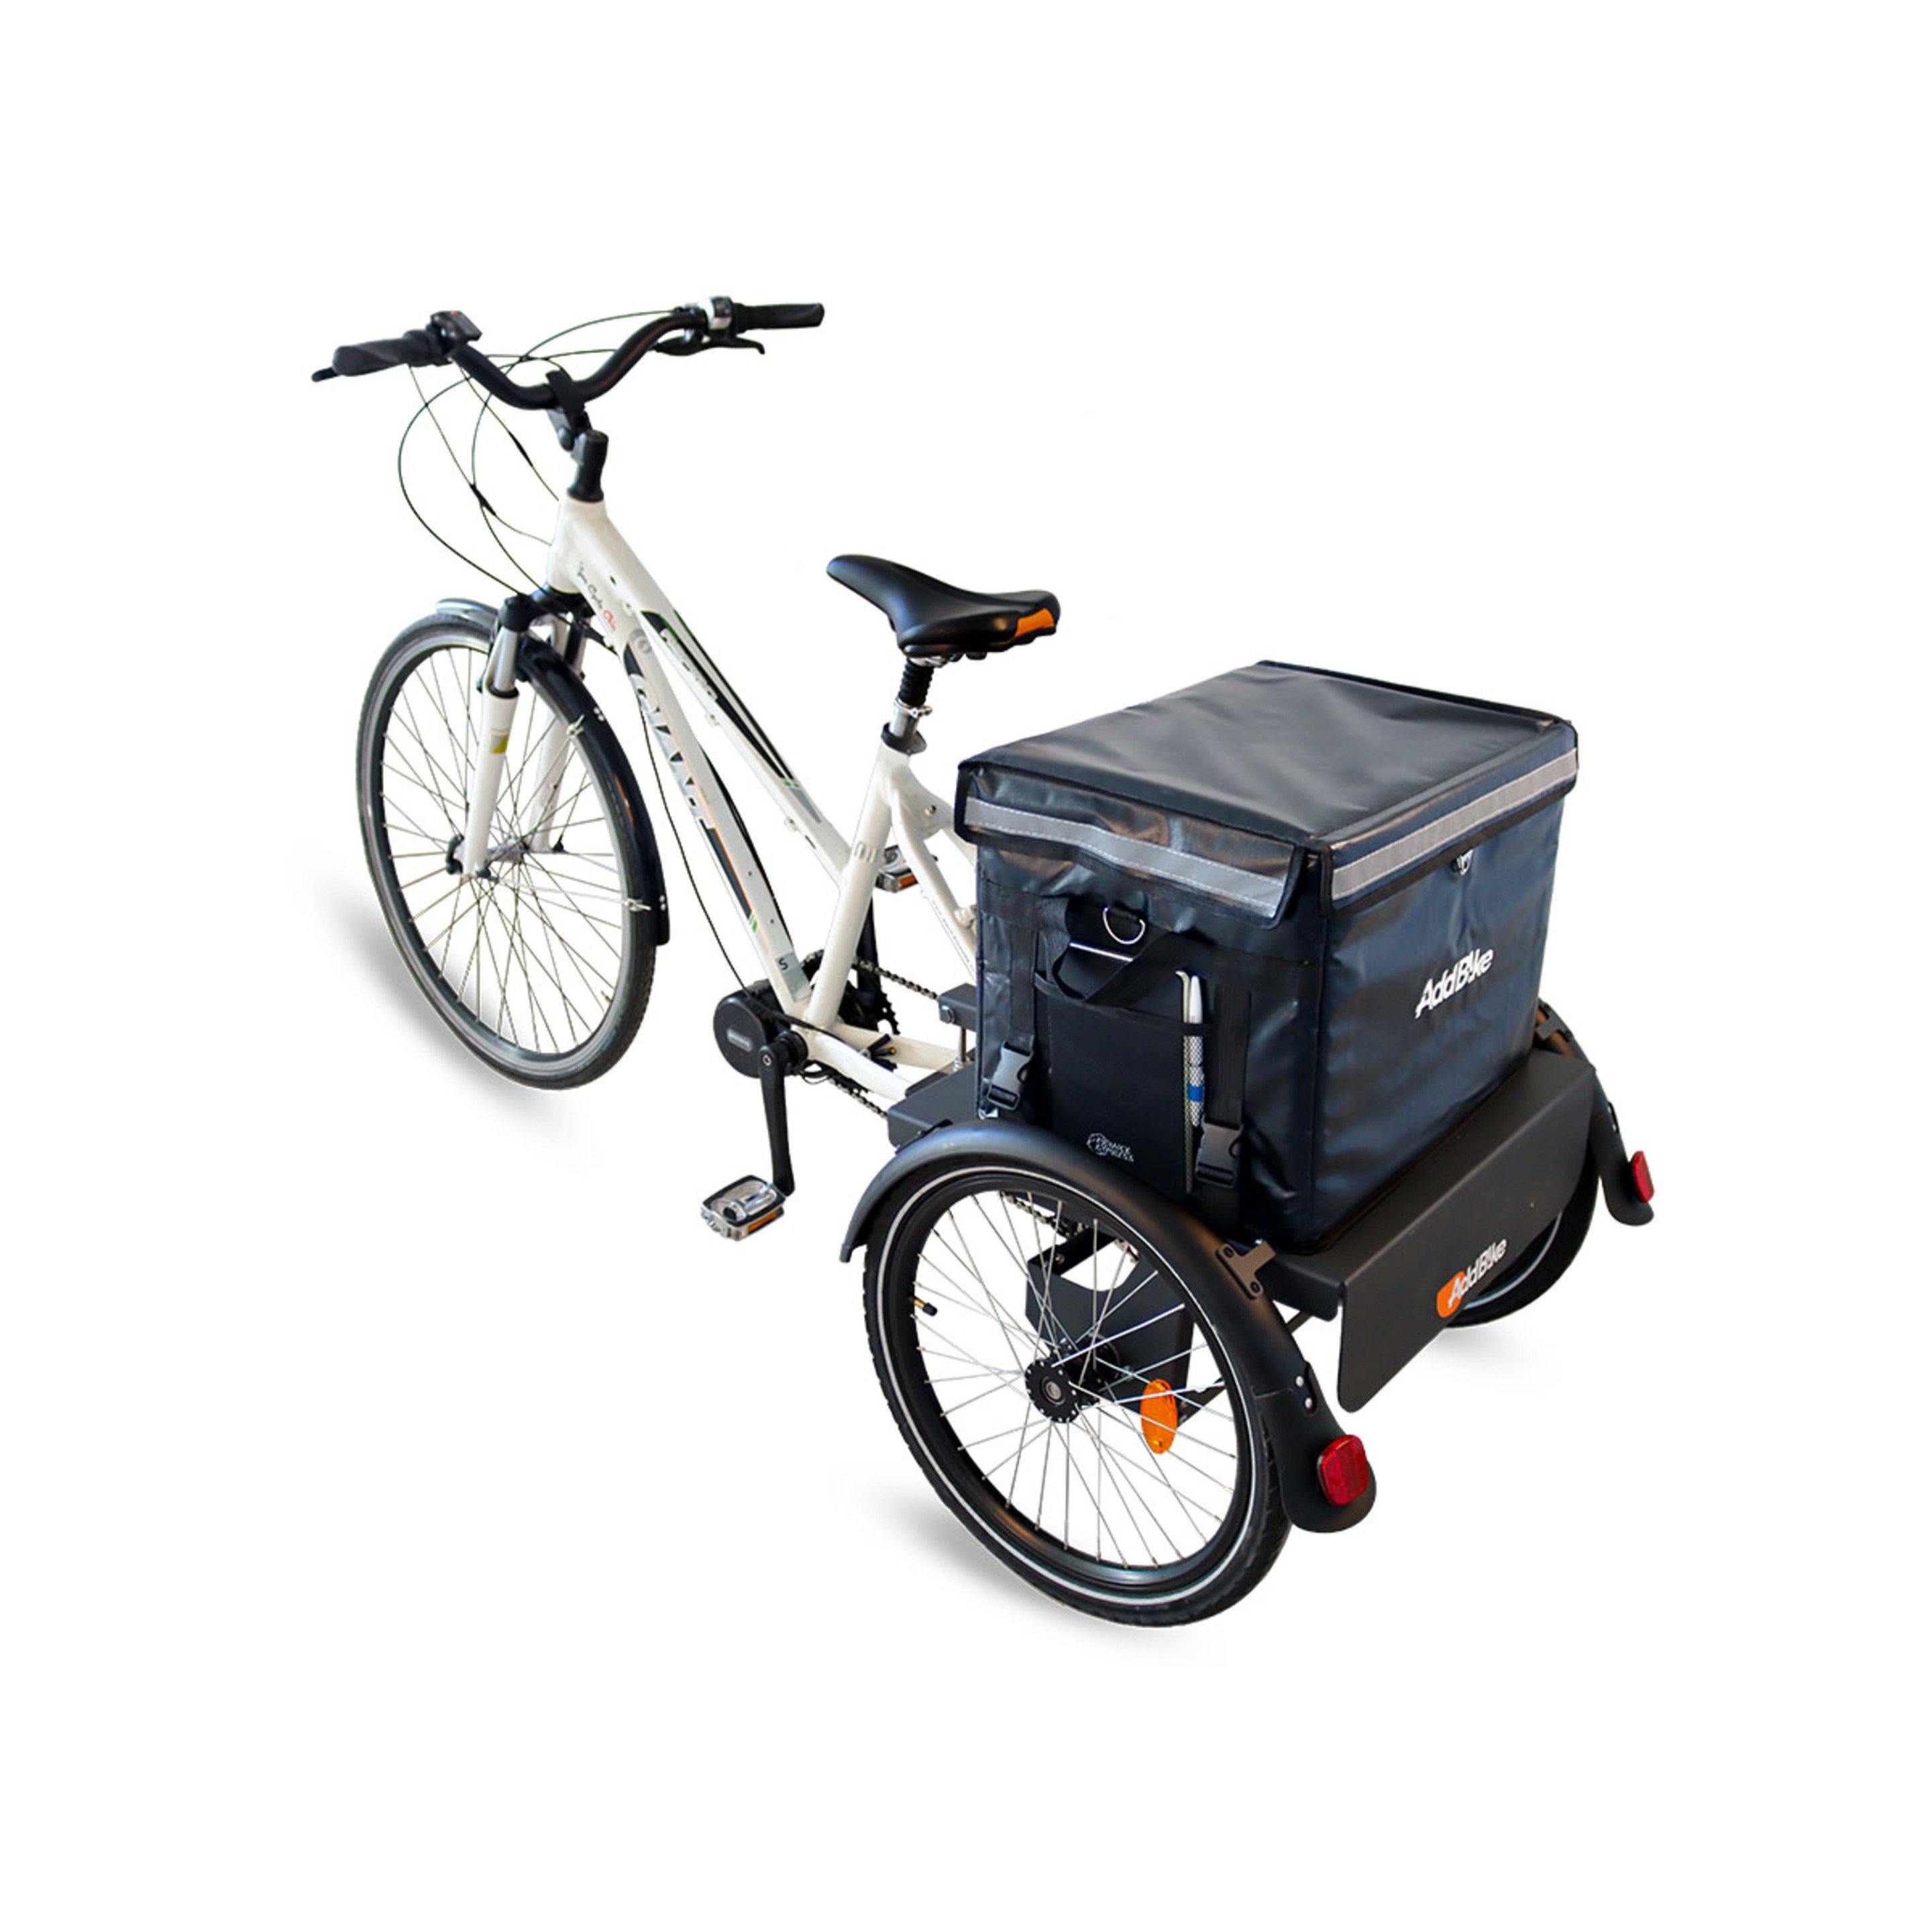 Kit Traseiro: Transporte De Carga - Addbike B-back Box - gris - 